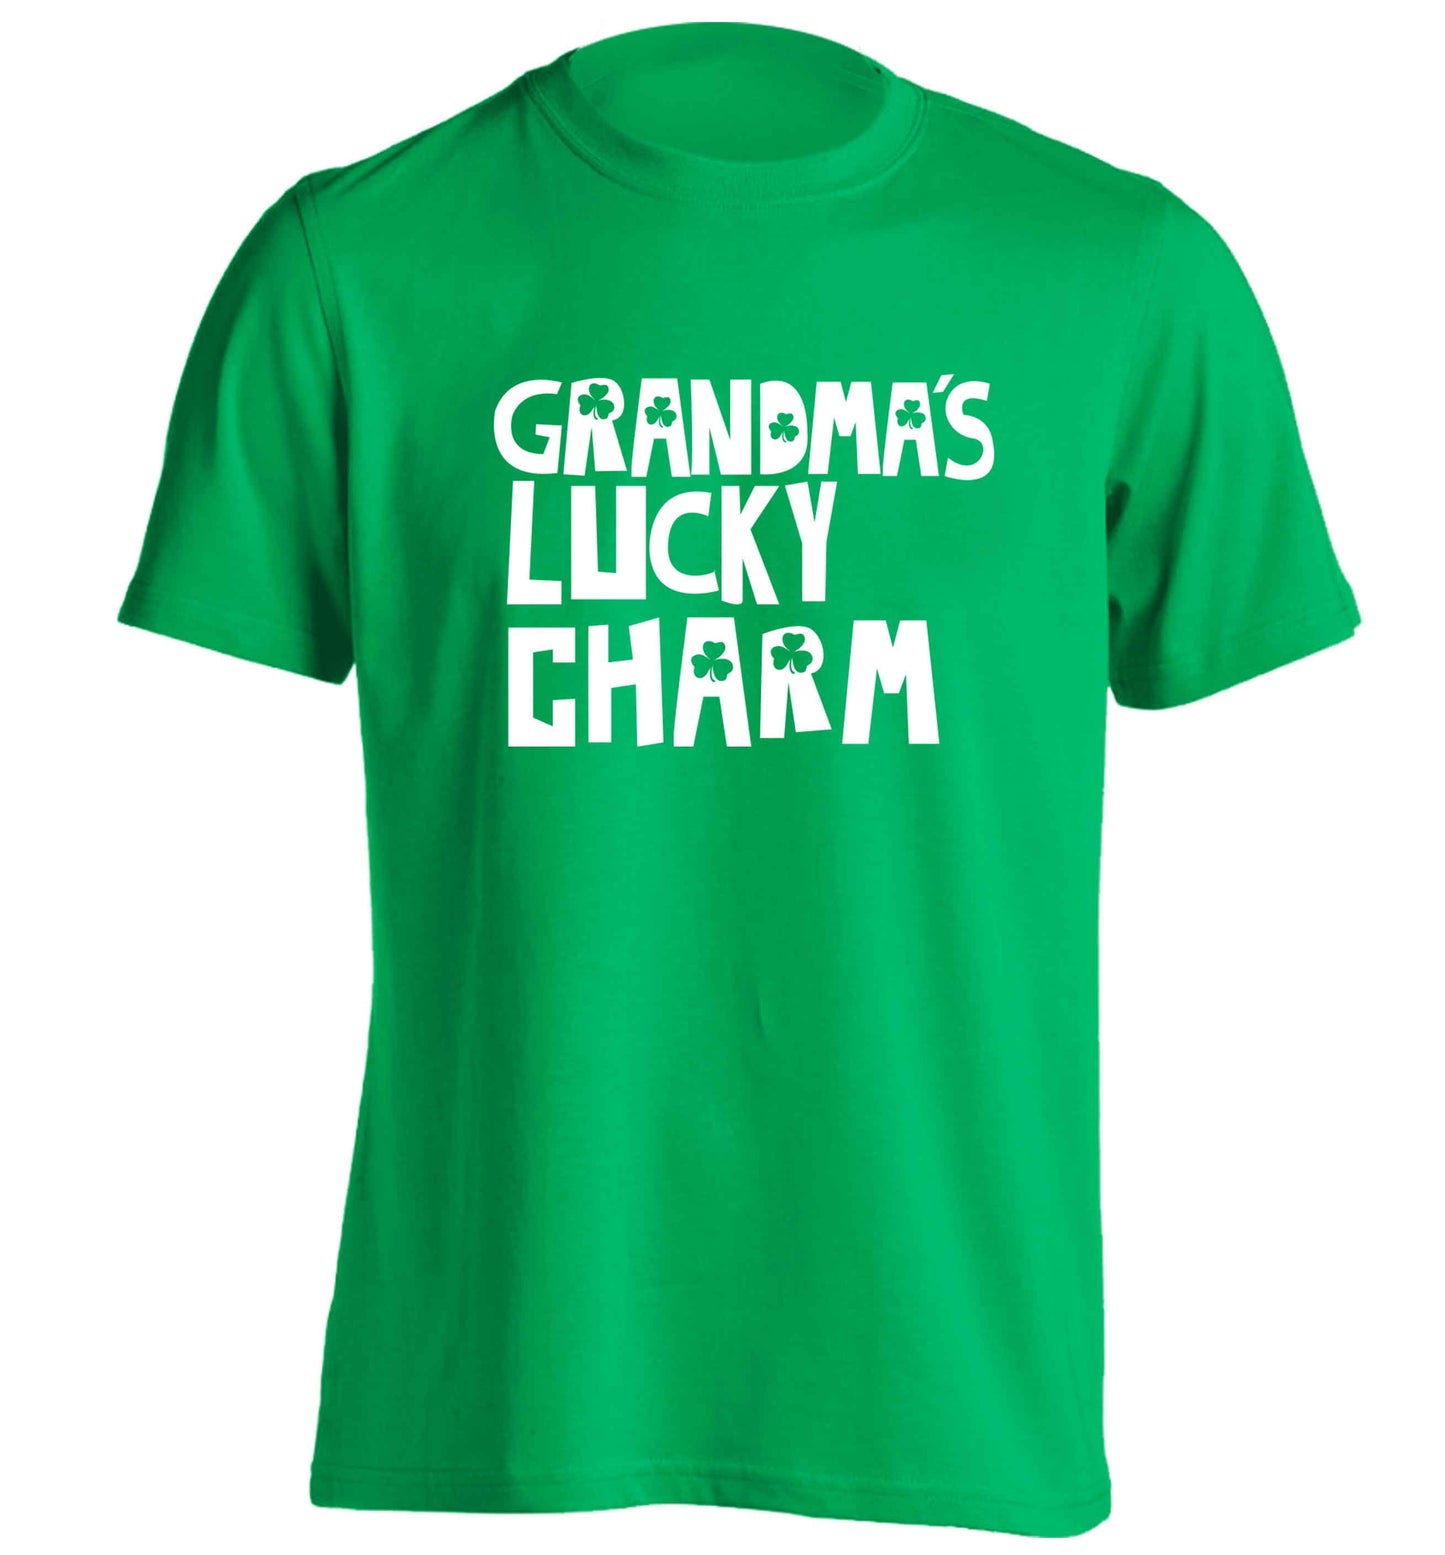 Grandma's lucky charm adults unisex green Tshirt 2XL